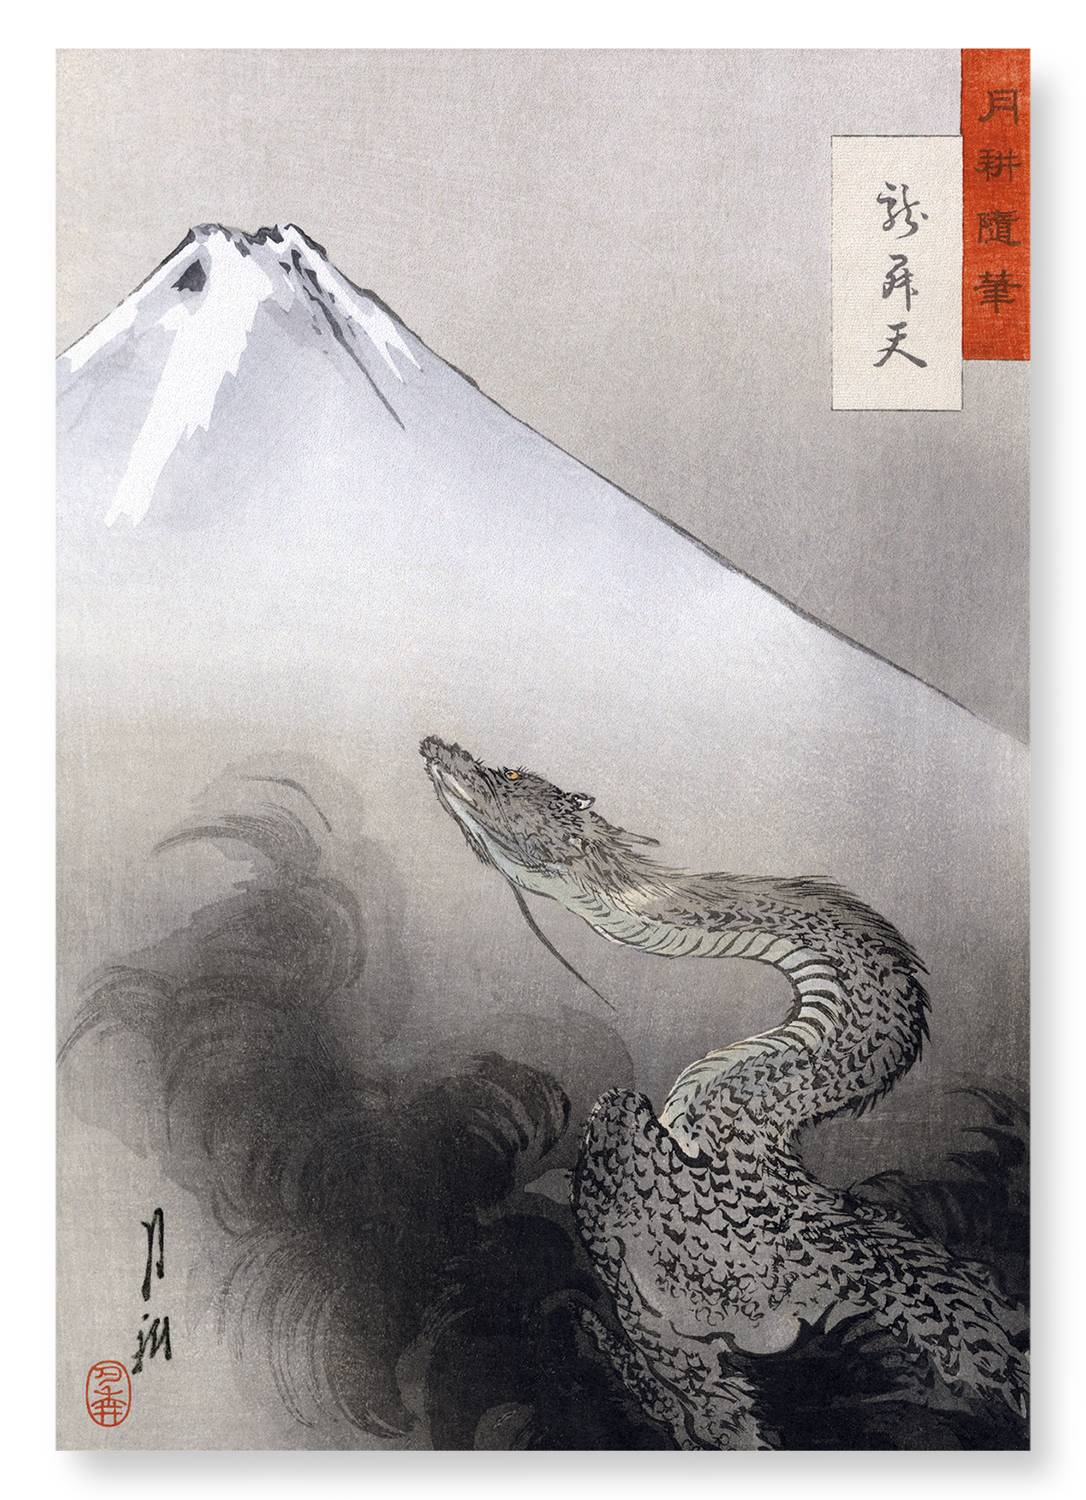 DRAGON RISING: Japanese Art Print